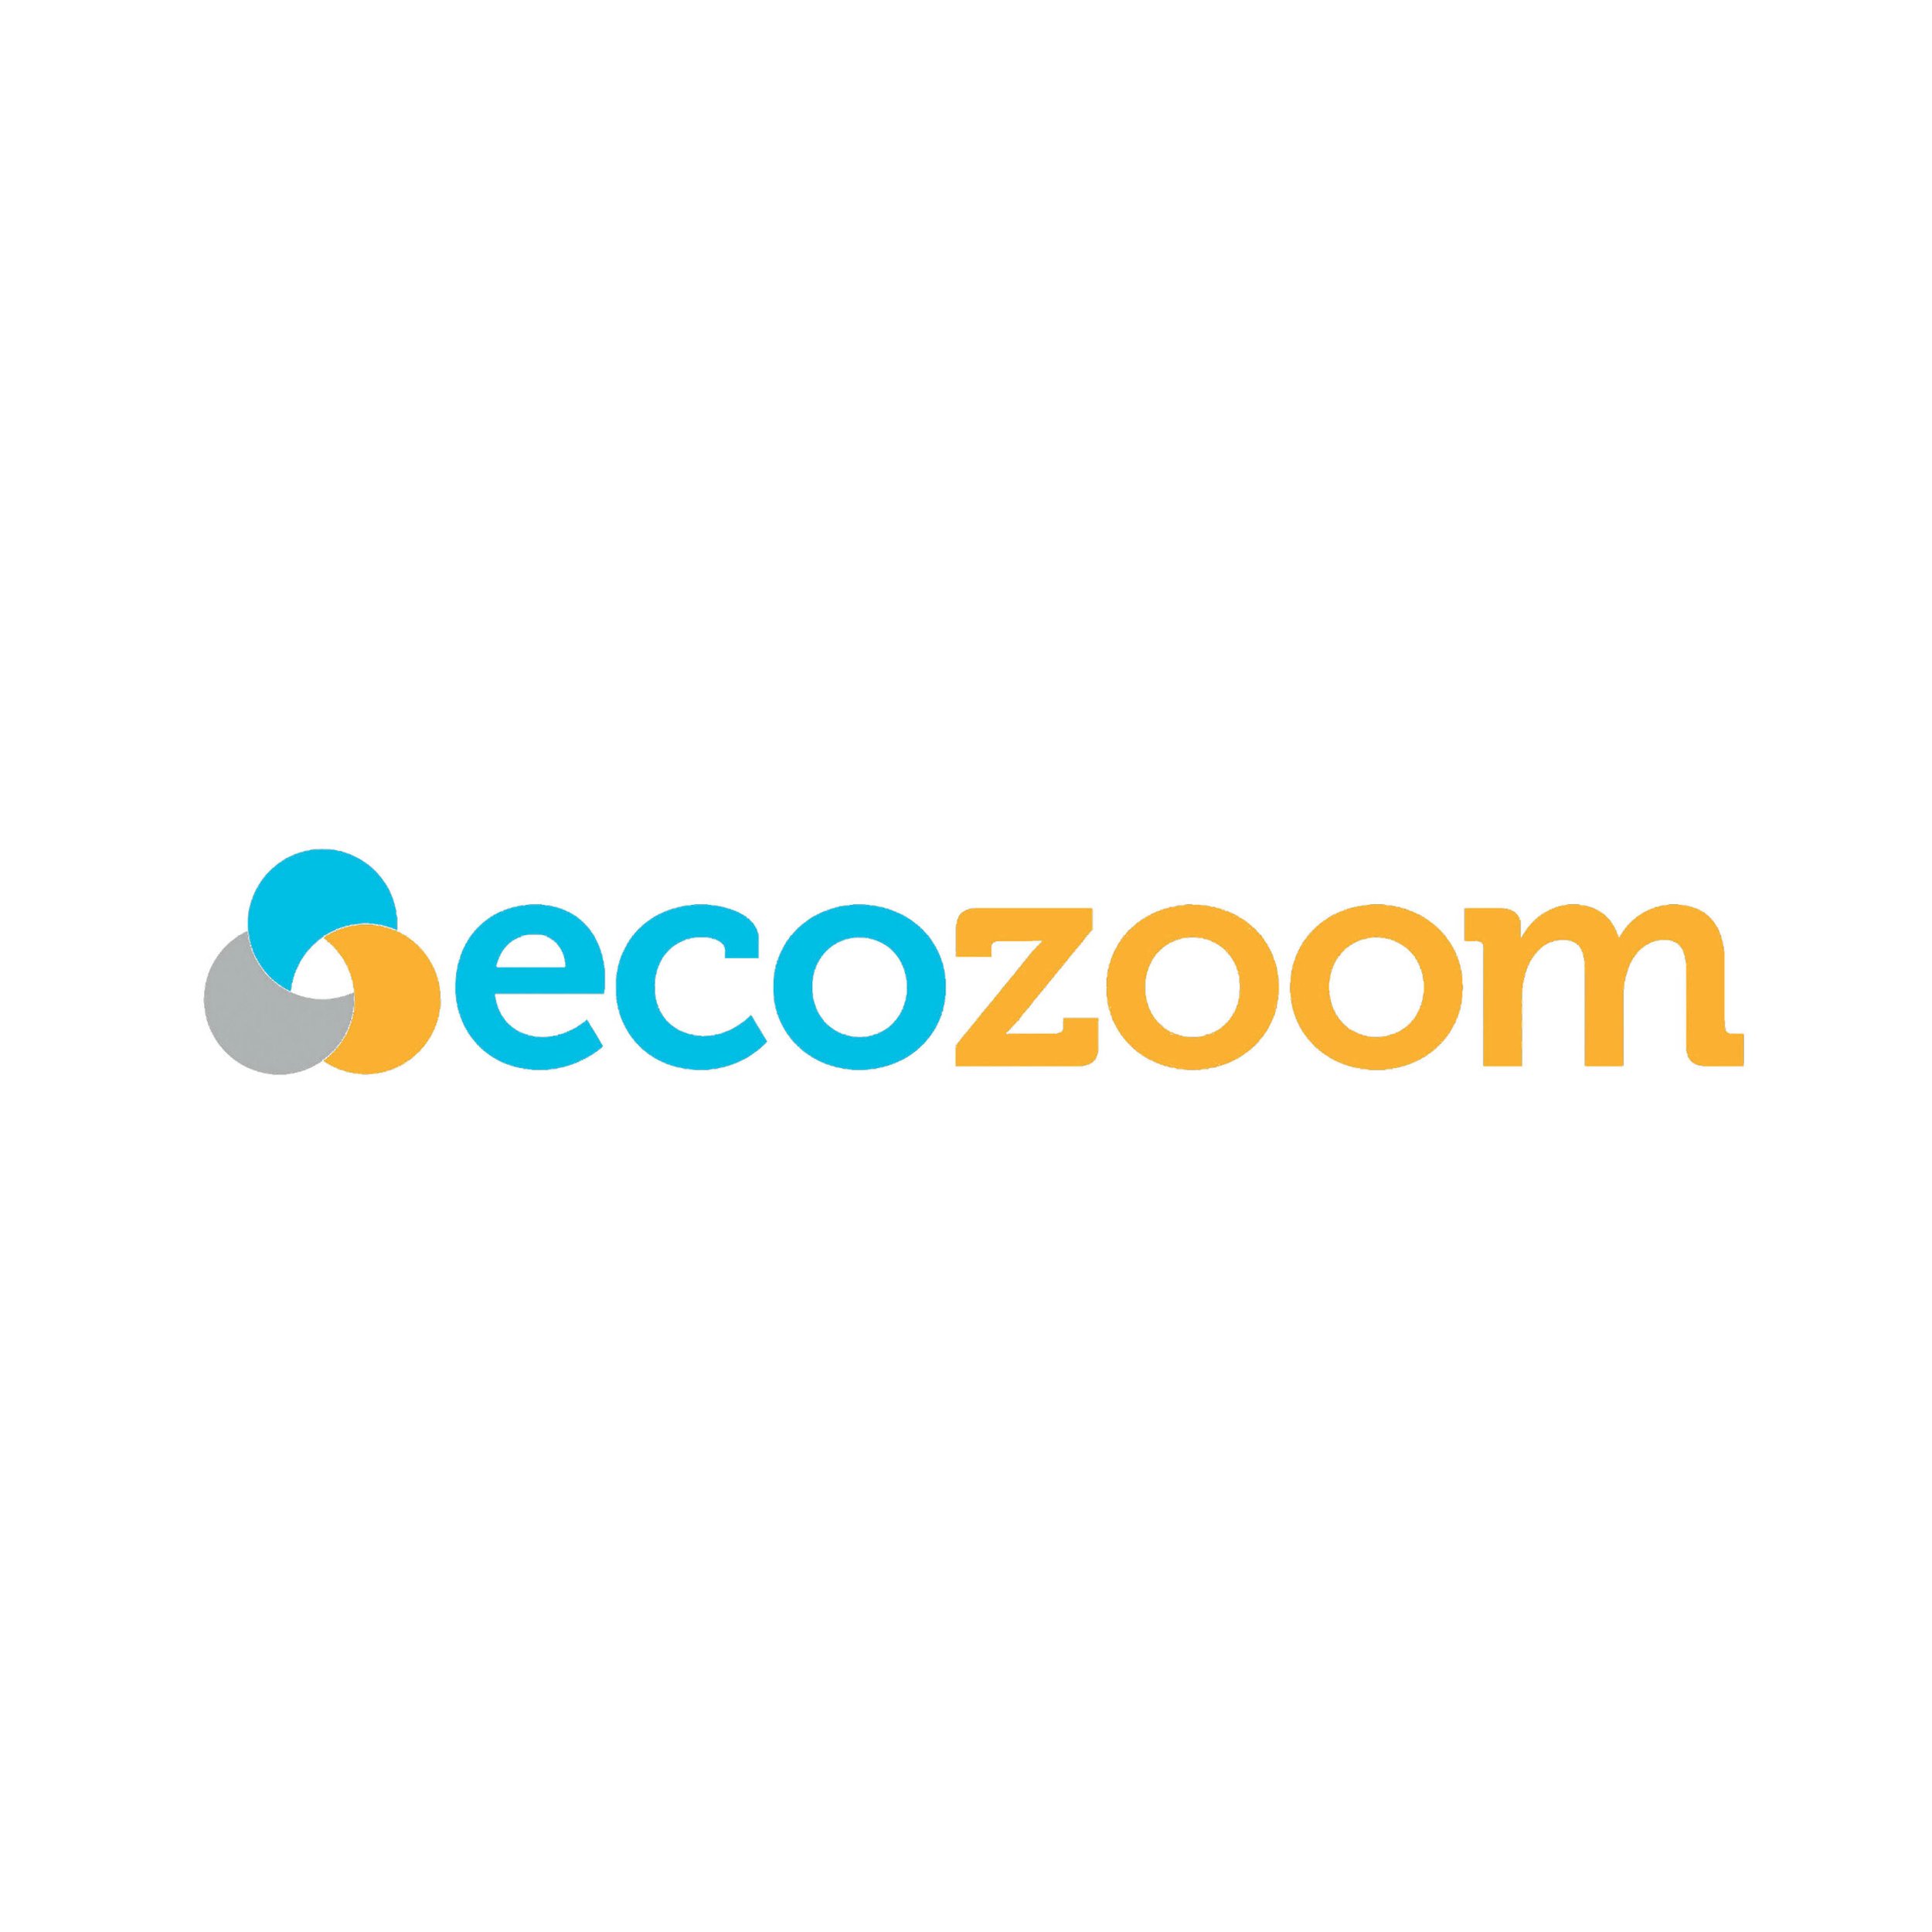 ecozoom-1.jpg